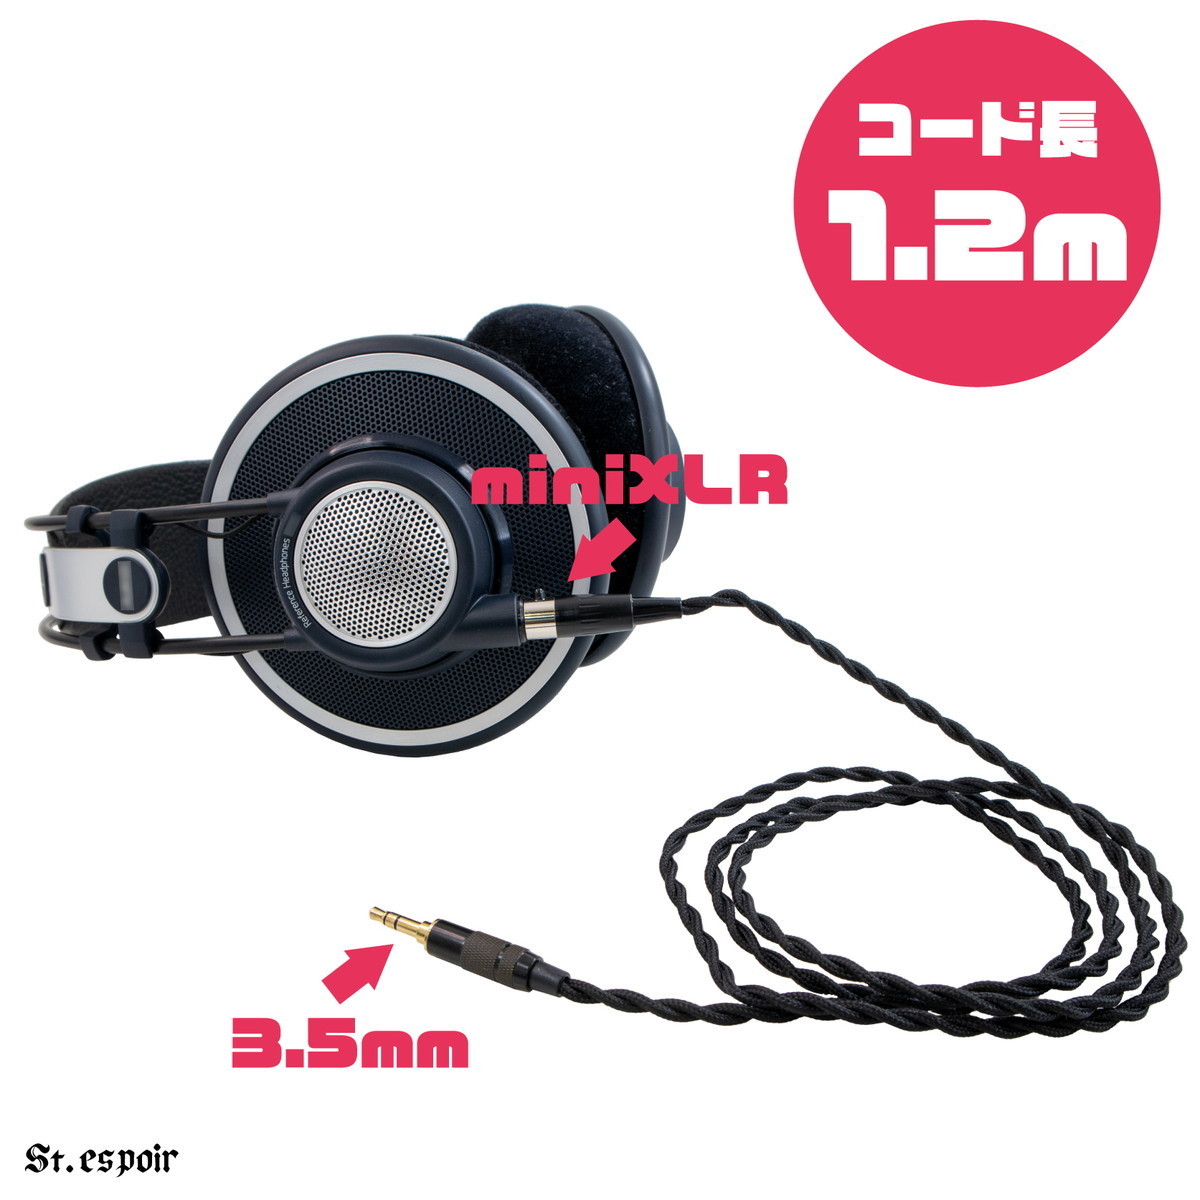  high grade headphone cable 1.2m mini XLR 1.2m nylon coating li cable * for exchange 3 ultimate Mini XLR plug. equipment .